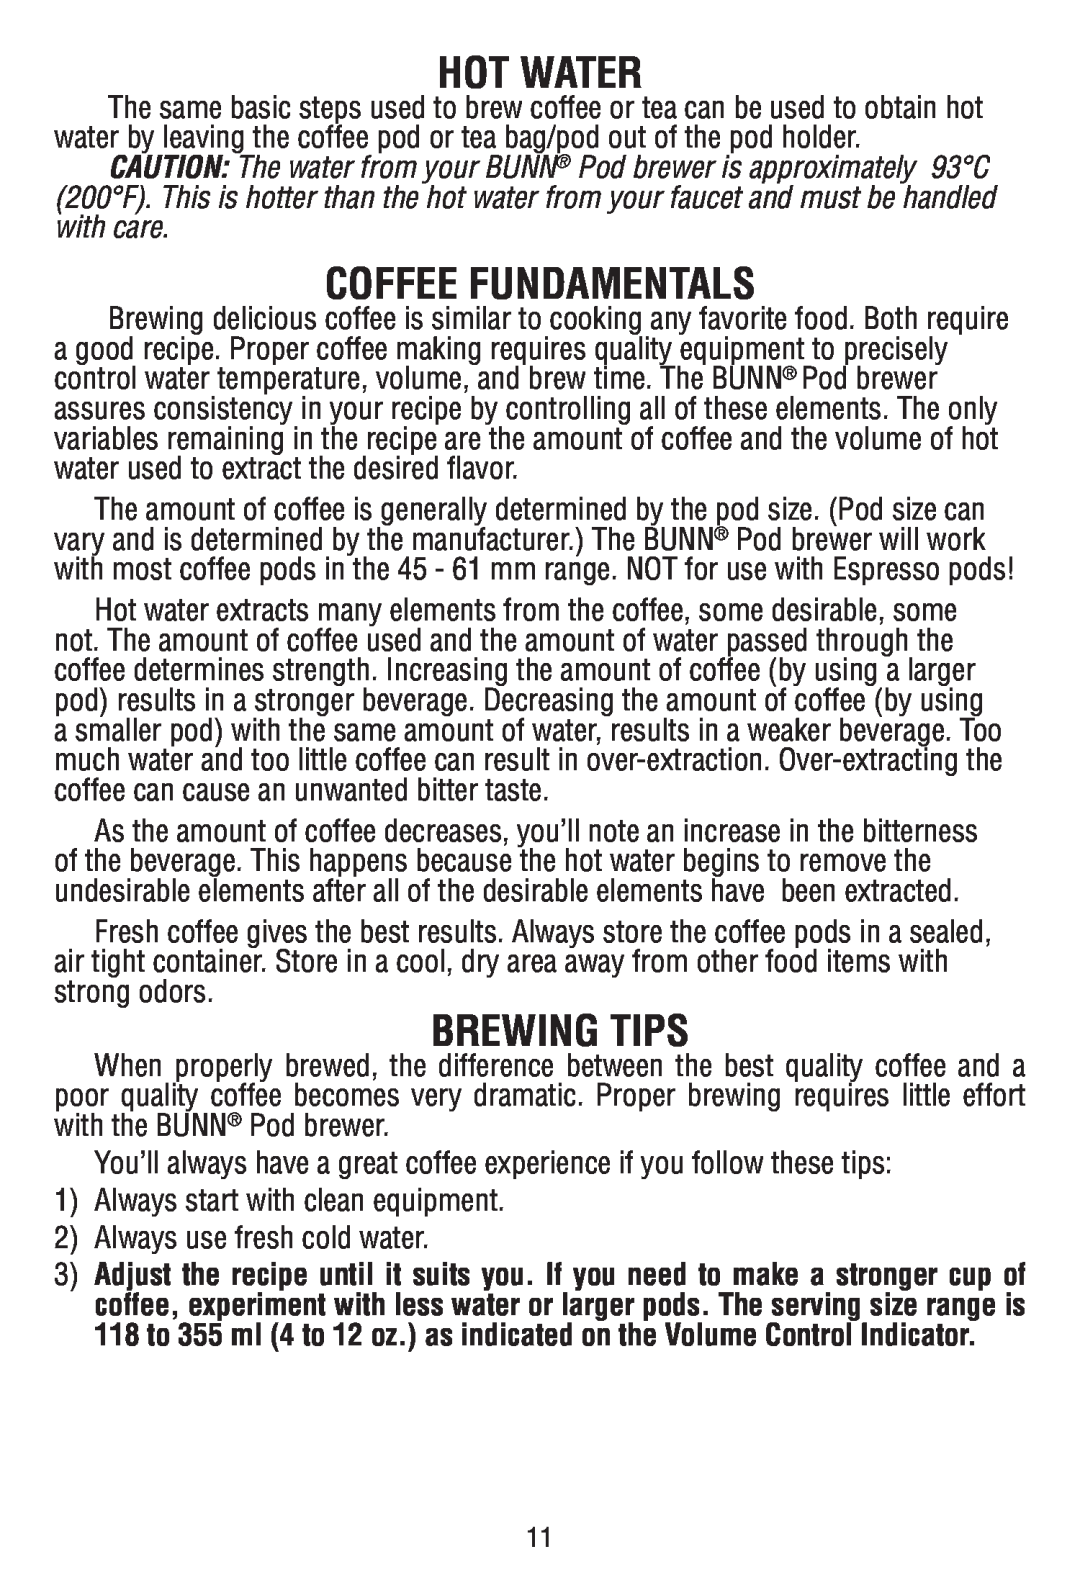 Bunn MCPA manual Hot Water, Coffee Fundamentals, Brewing Tips 